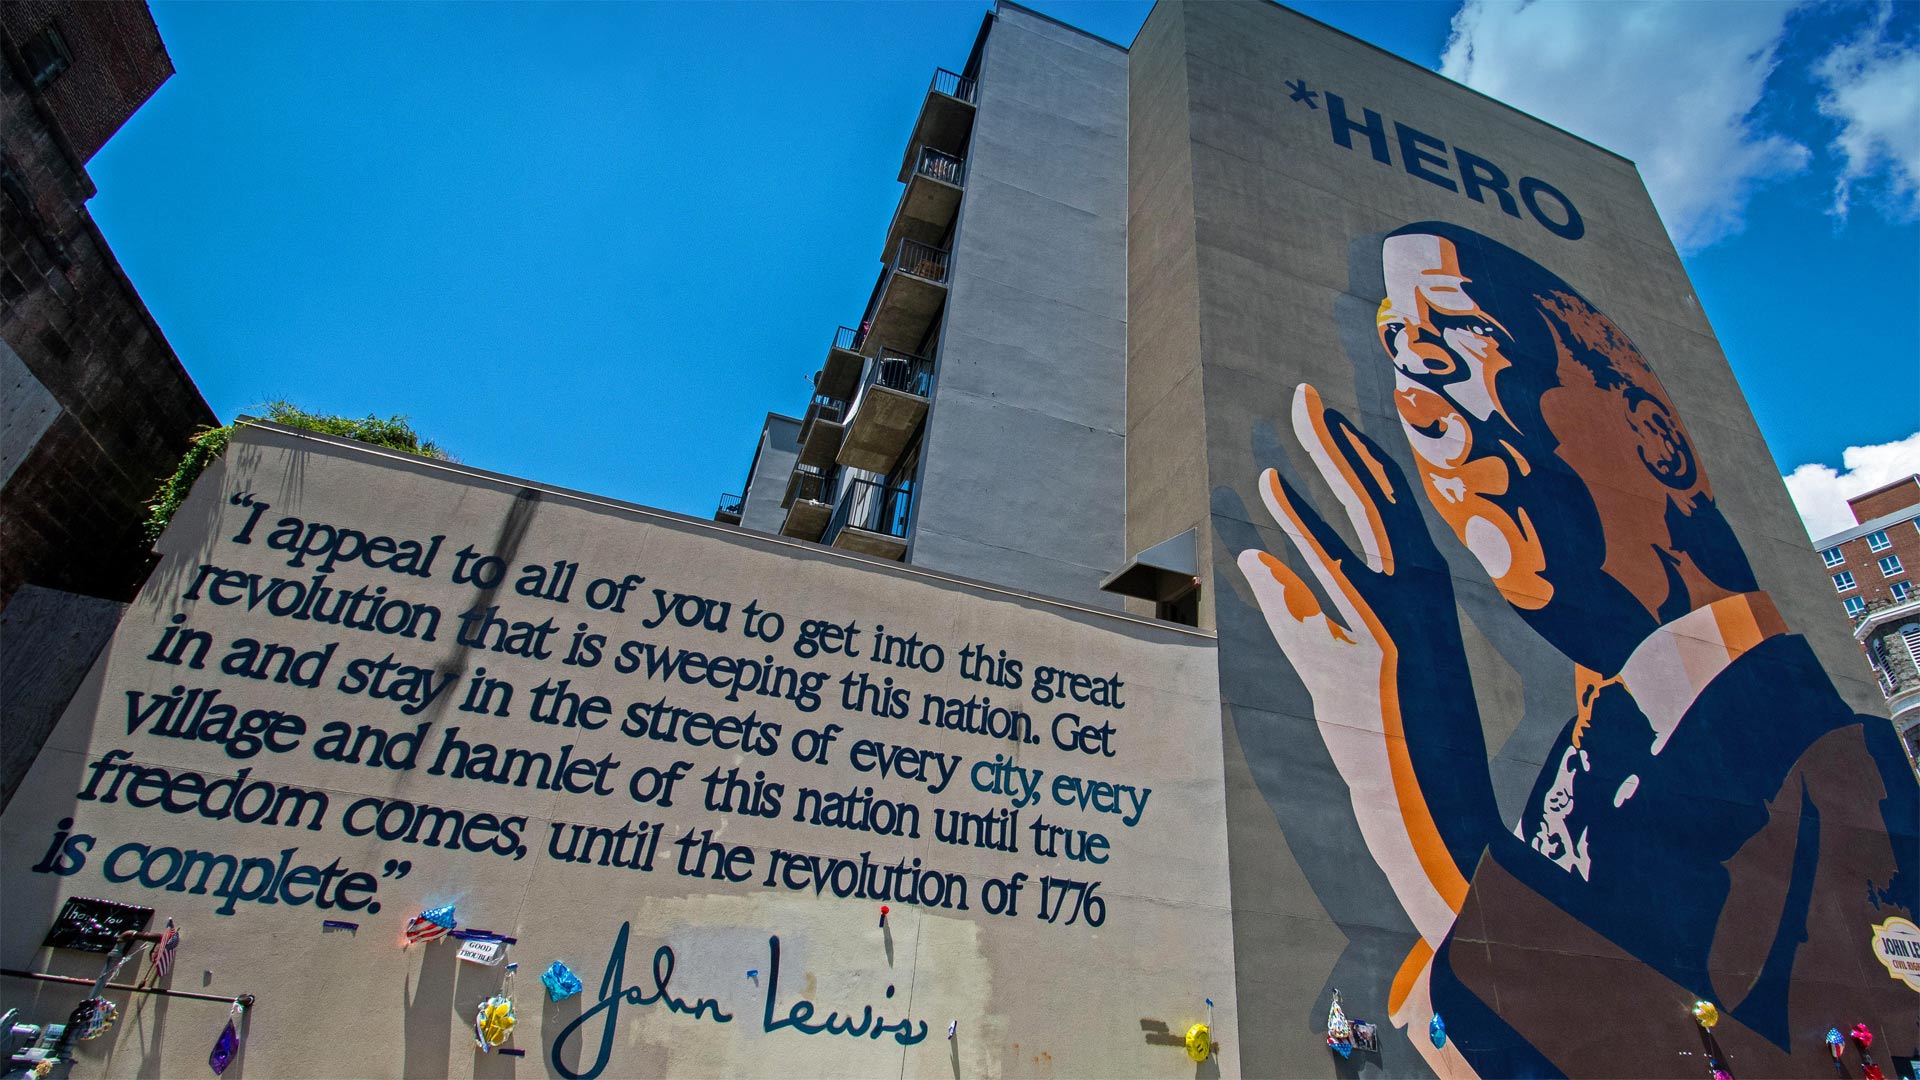 John Lewis hero mural by Sean Schwab in the Sweet Auburn district of Atlanta, Georgia - Ilene Perlman/Alamy)